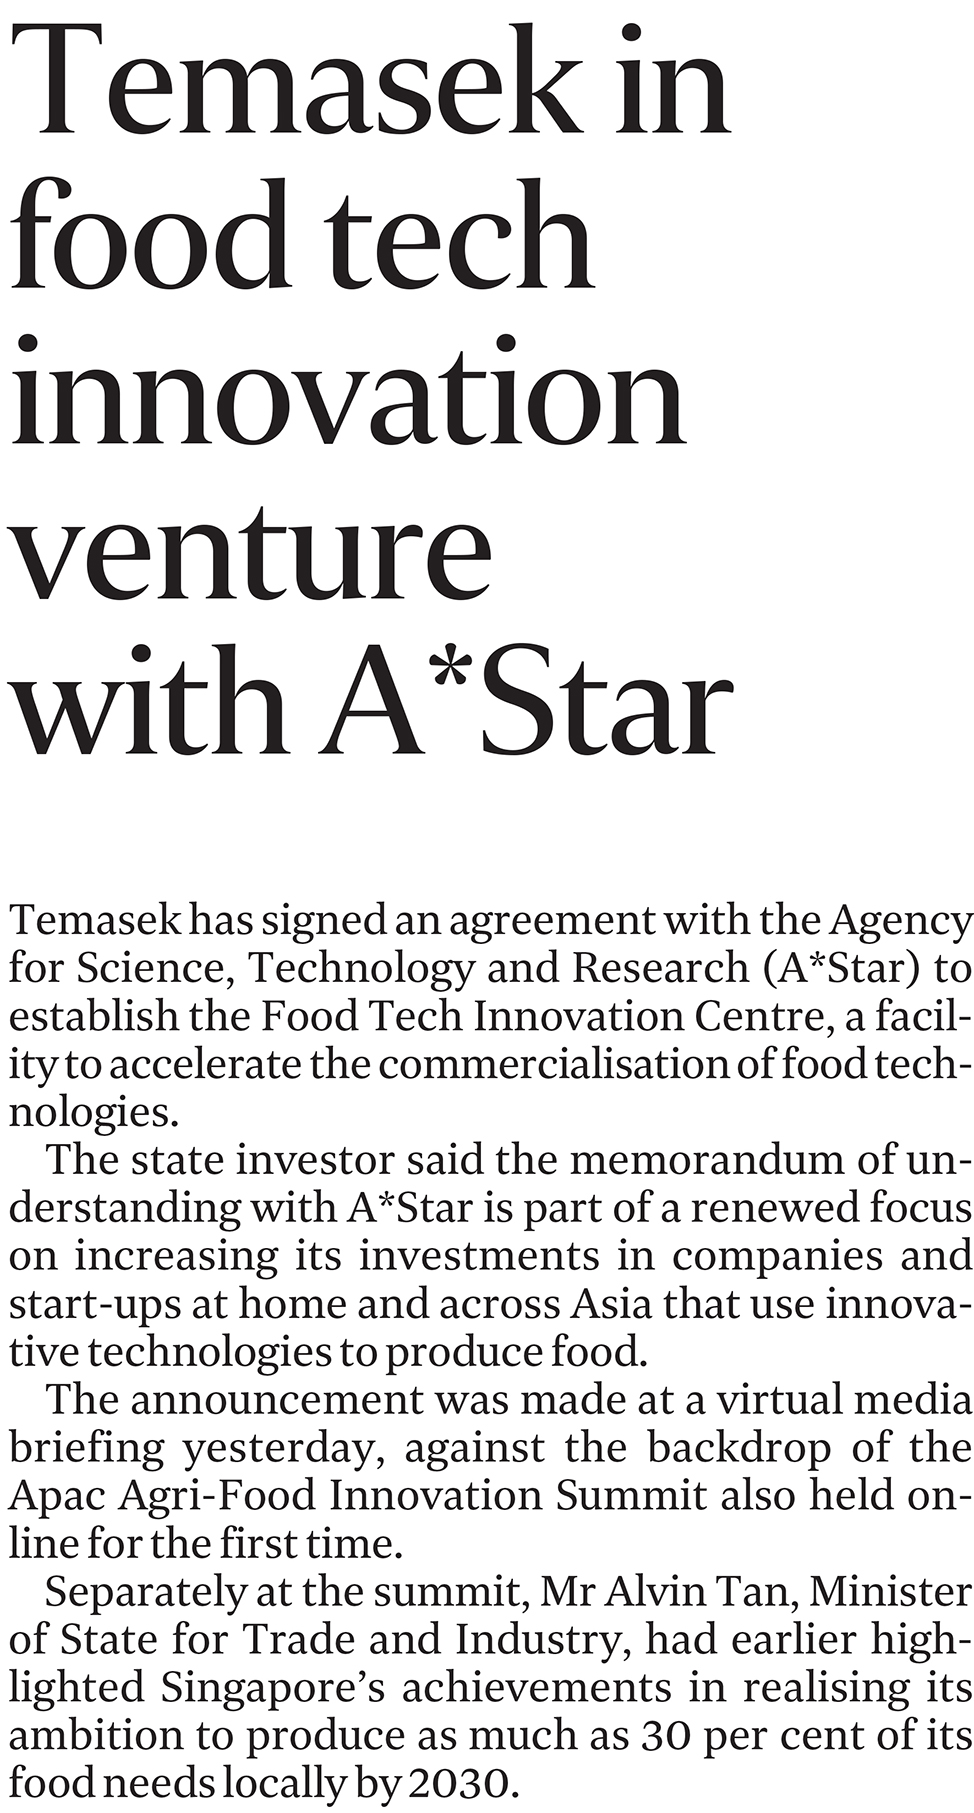 temasek-in-food-tech-innovation-venture-with-astar